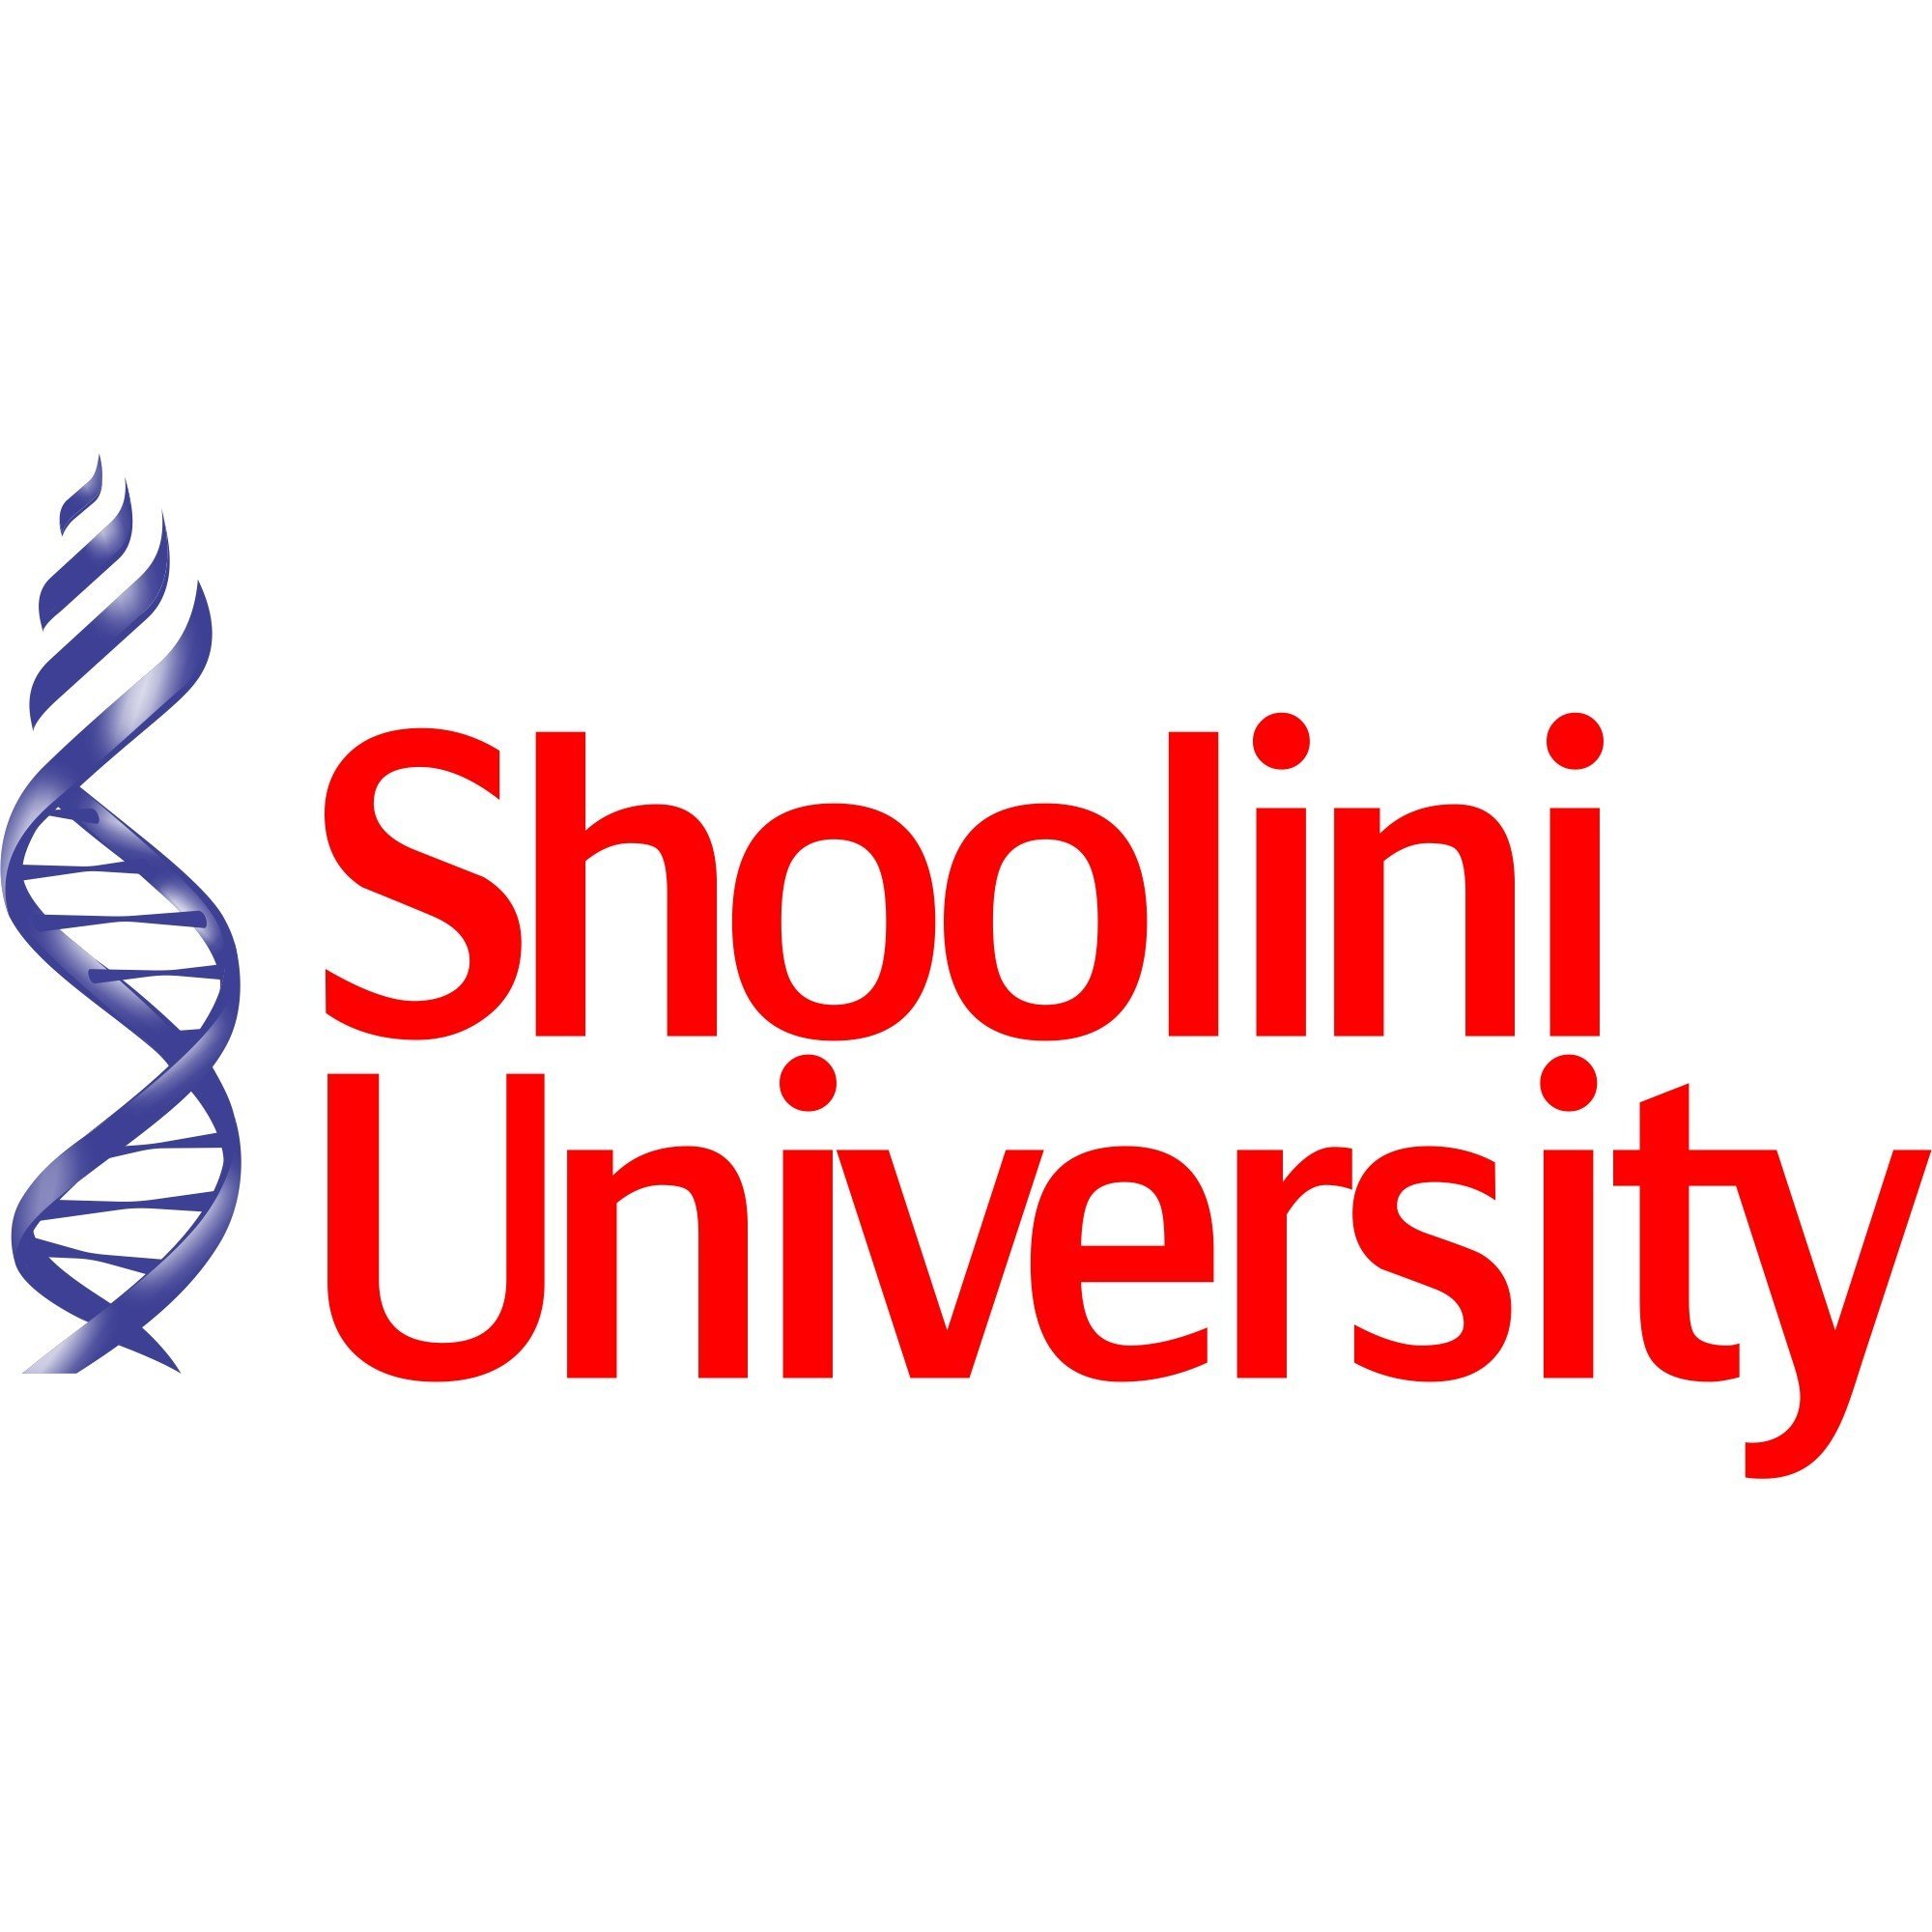 Shoolini University tops India in QS rankings on citation index